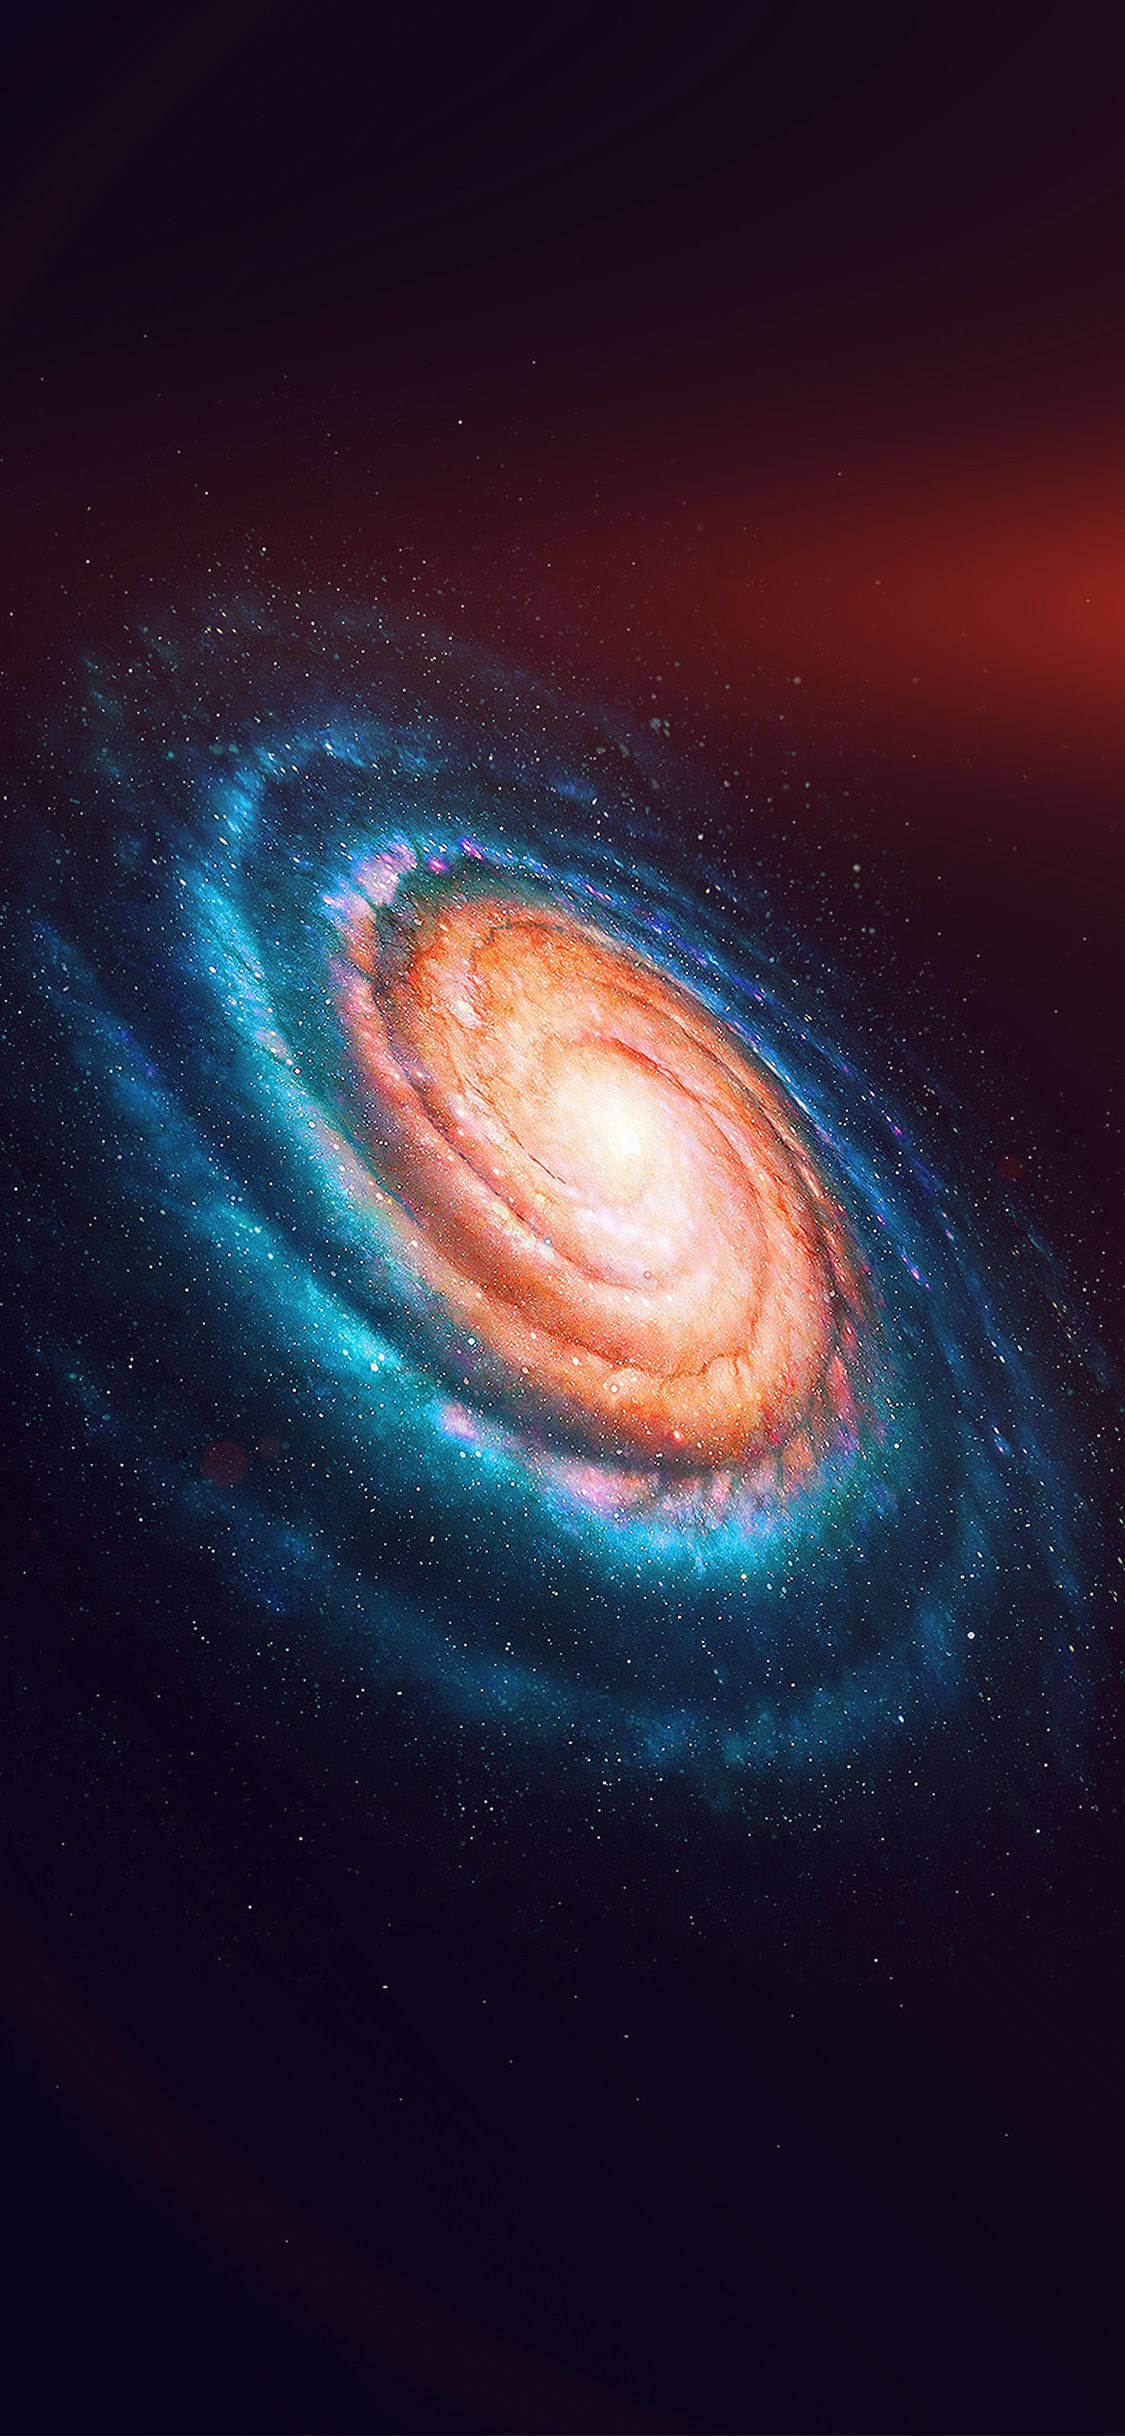 Download Milky Way Galaxy In Space Iphone Wallpaper Wallpapers Com